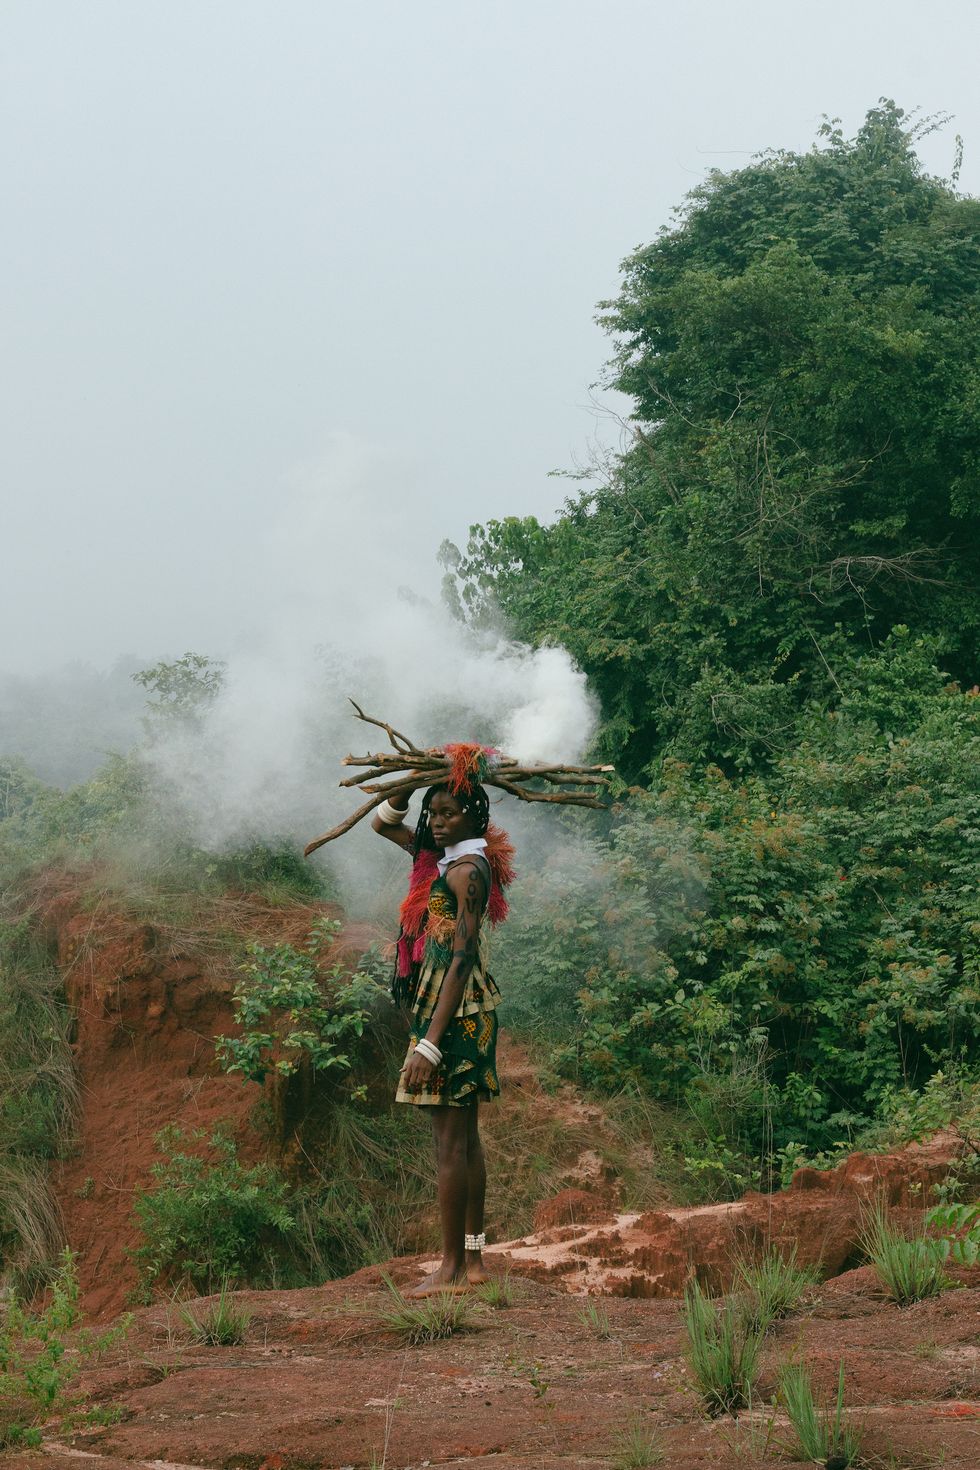 Daniel Obasi & Yagazie Emezi Probe Igbo Culture's Past and Present Traditions In This New Multimedia Project